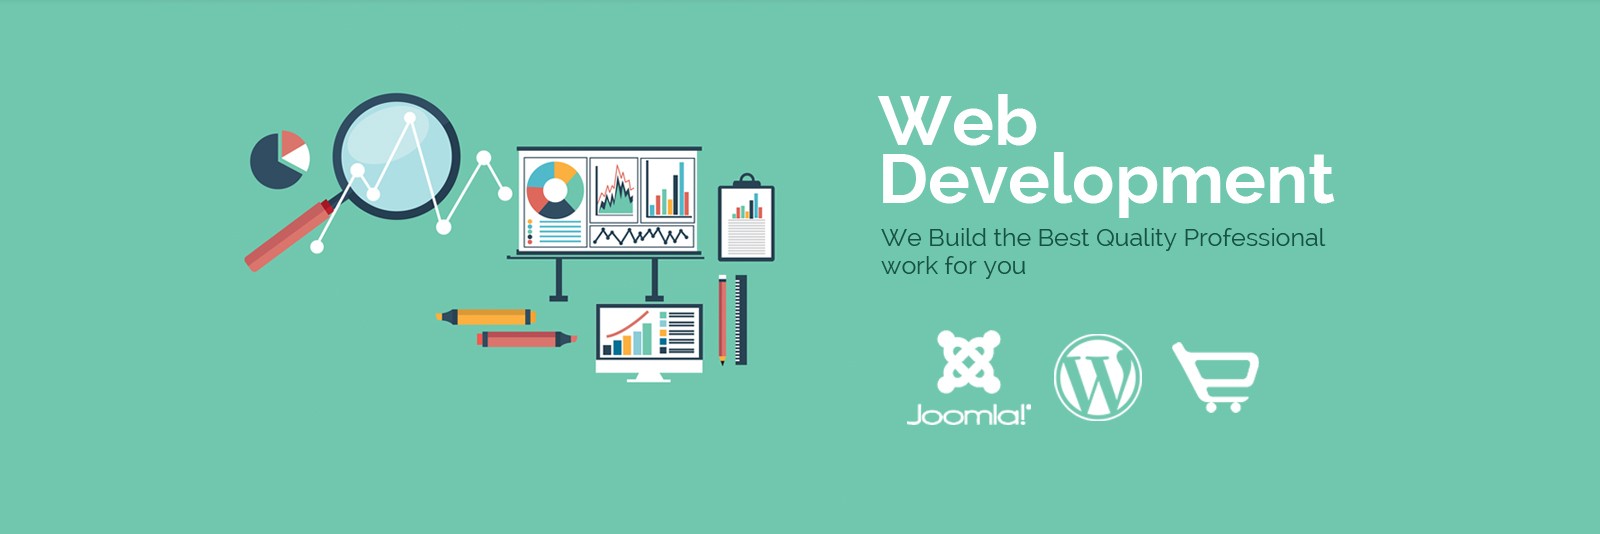 web development companies in mumbai